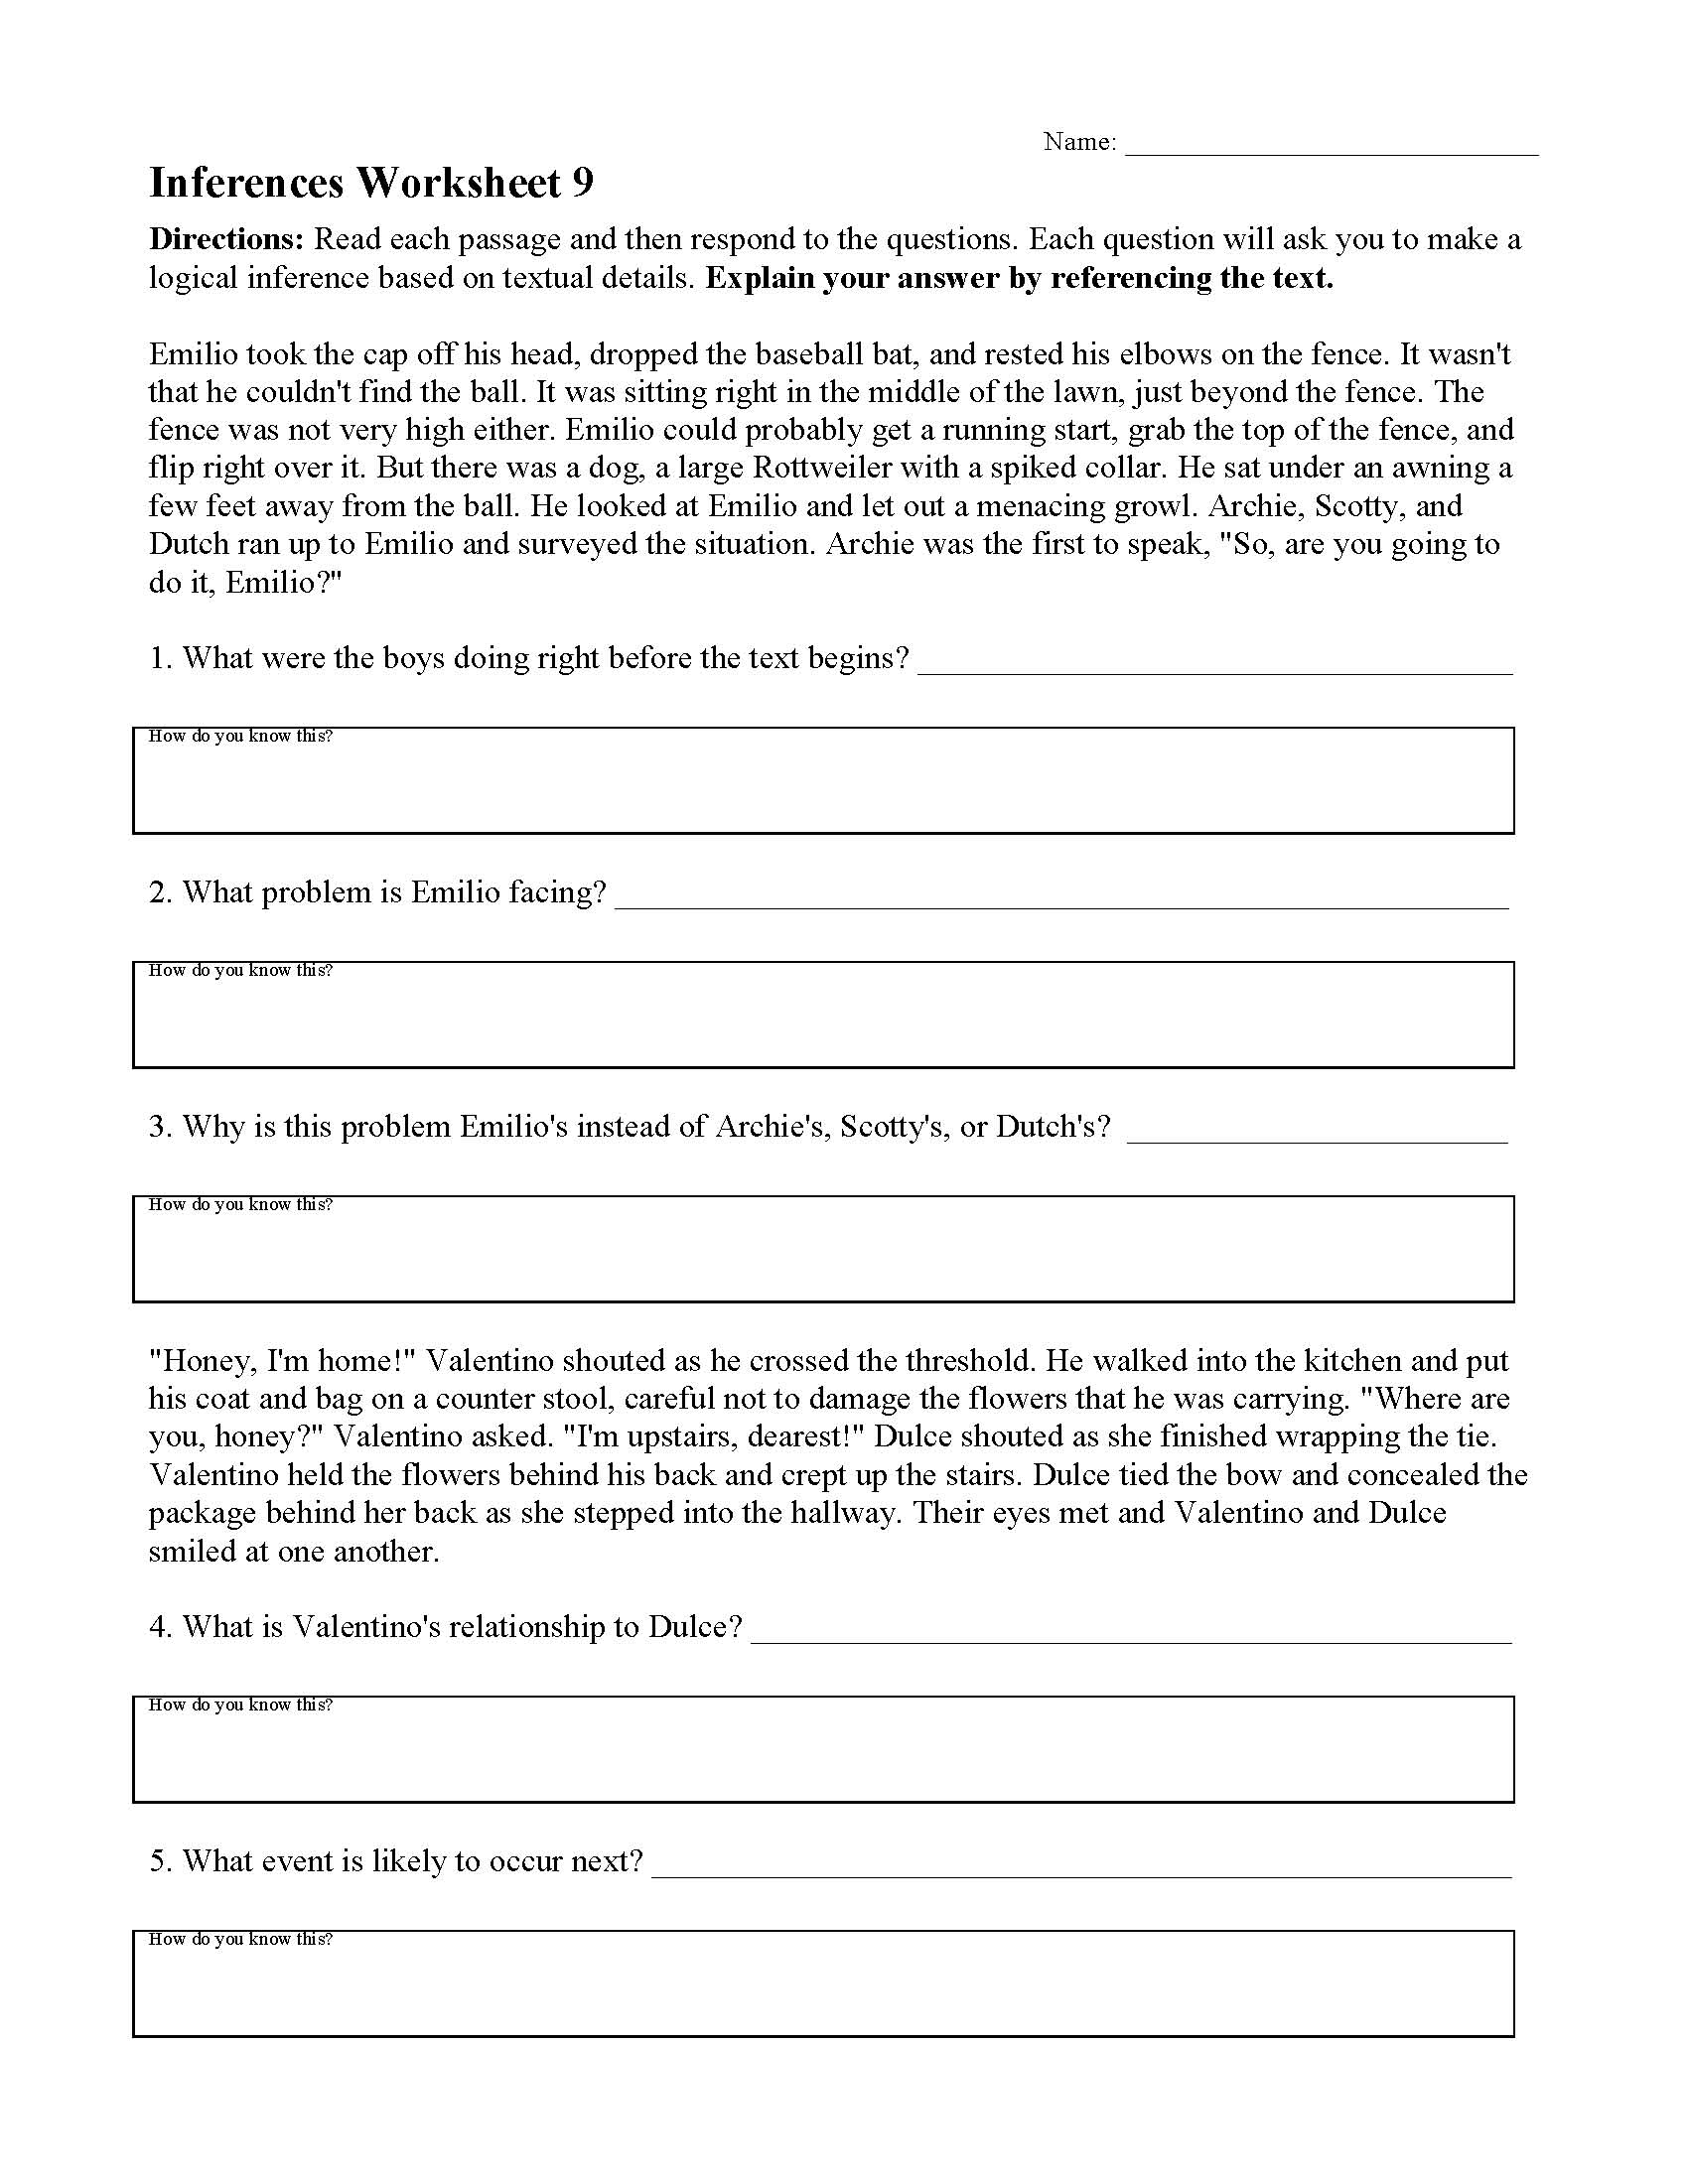 Inferences Worksheet 9 Reading Activity - 9th Grade English Worksheets Free Printable